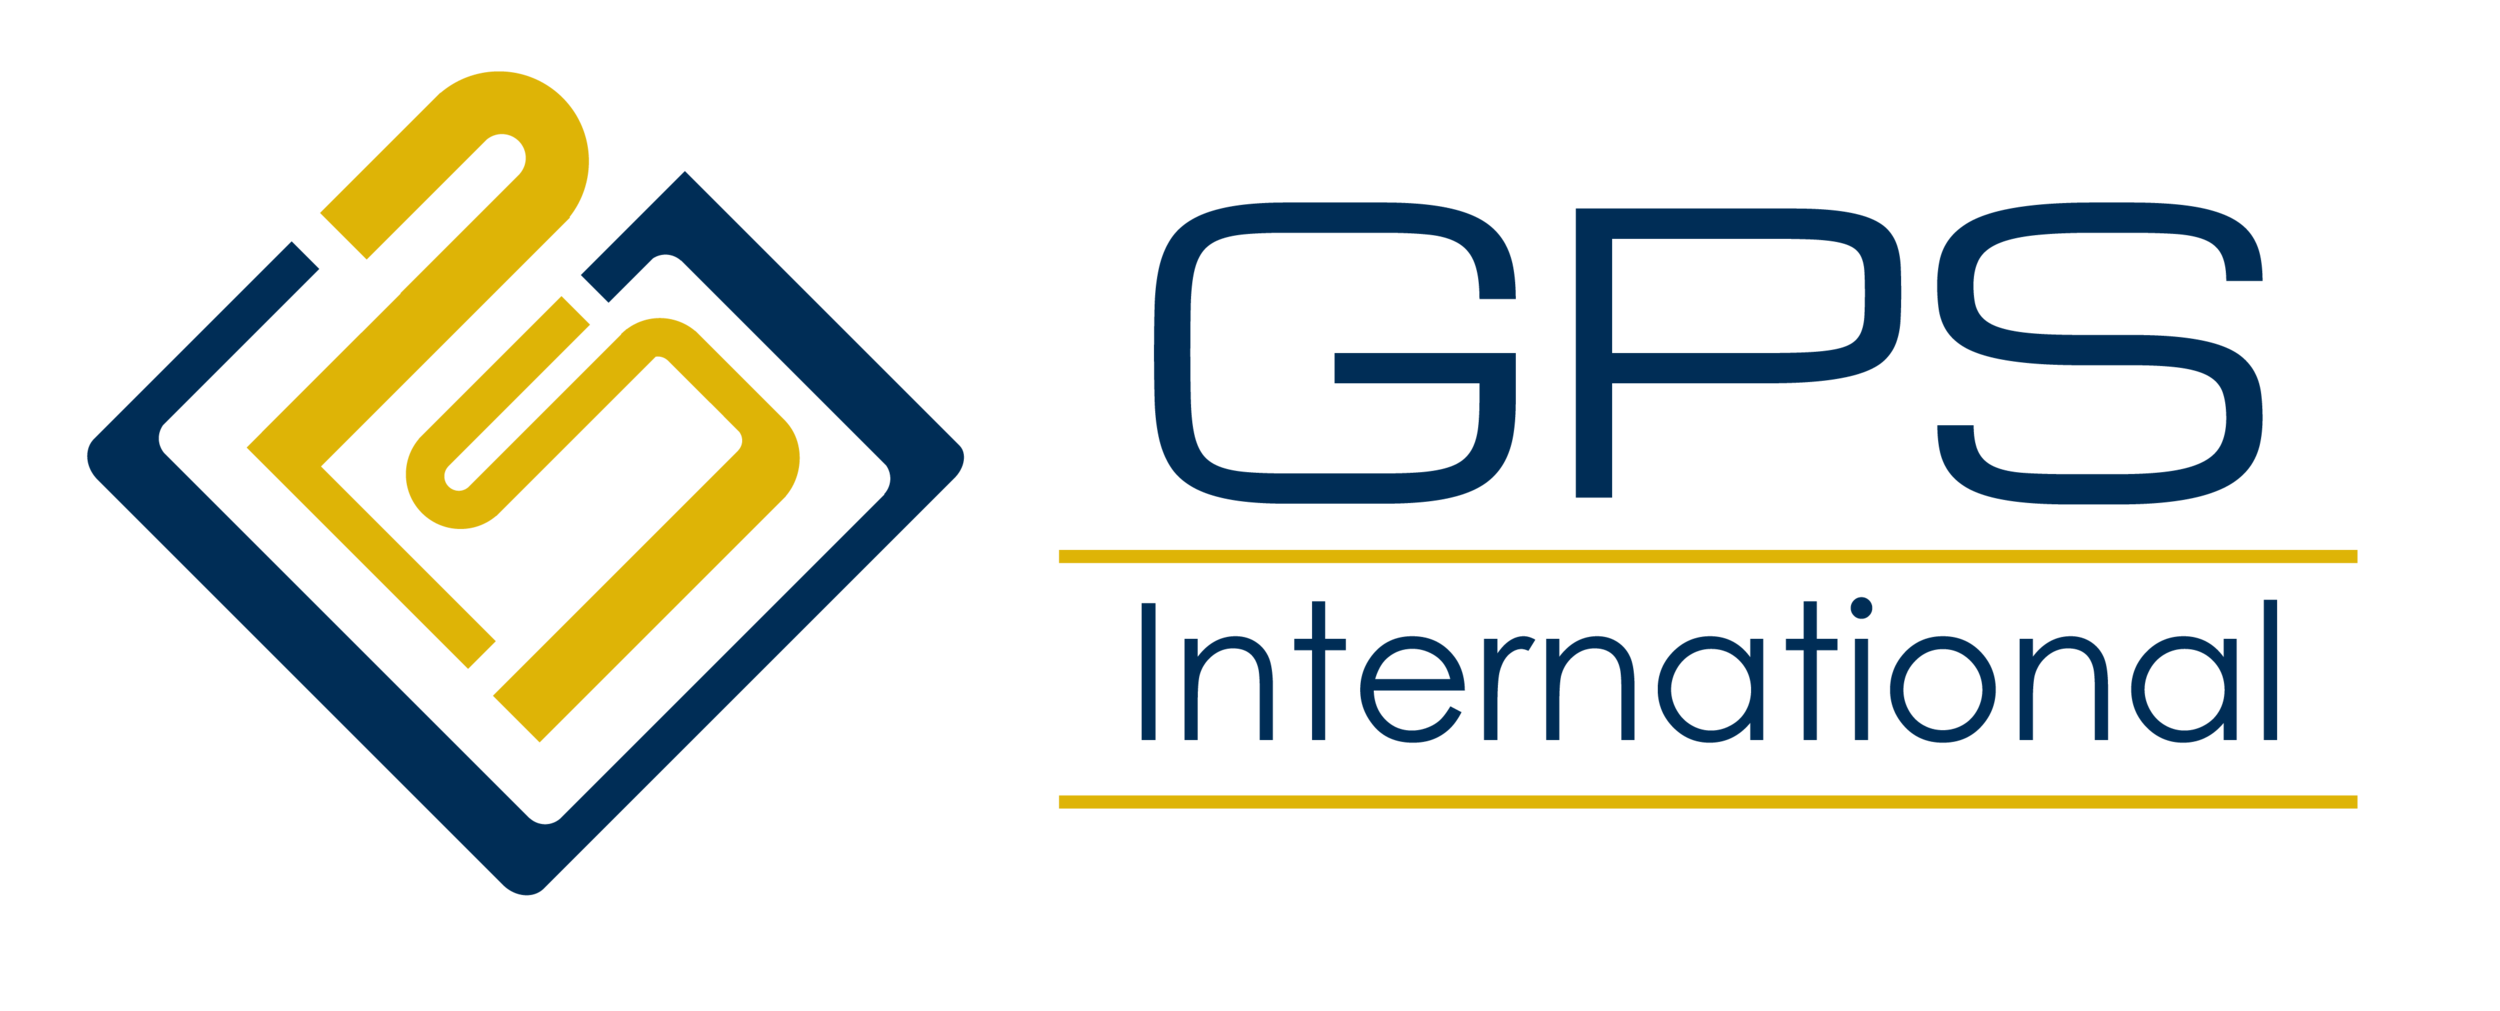 Fighter Aubergine fokus GPS International LLC | The Woodlands, TX | ESG New Technology